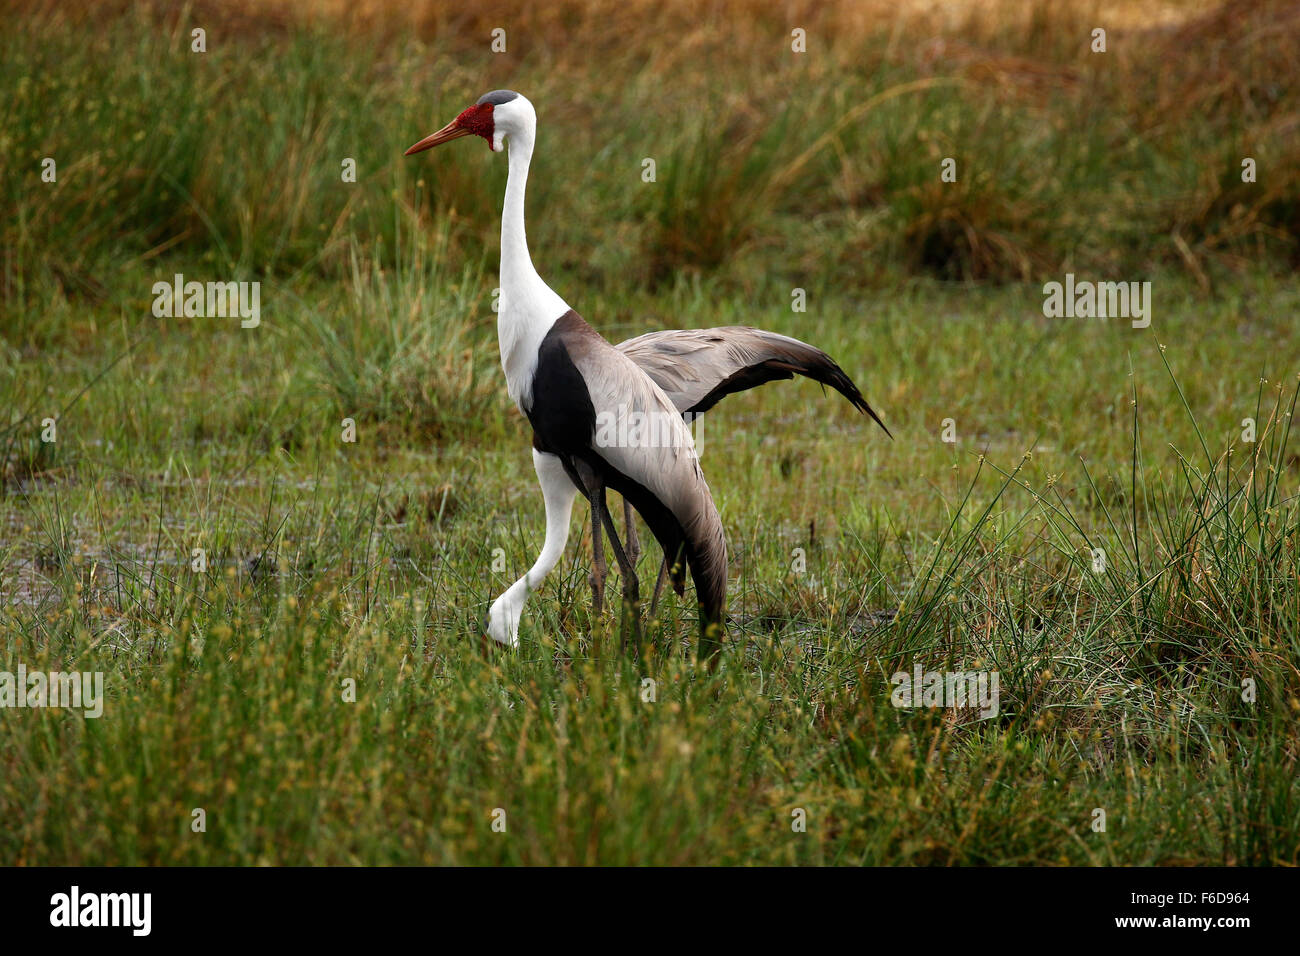 The wattled crane (Bugeranus carunculatus) is a large bird found in Africa, south of the Sahara Desert. Stock Photo